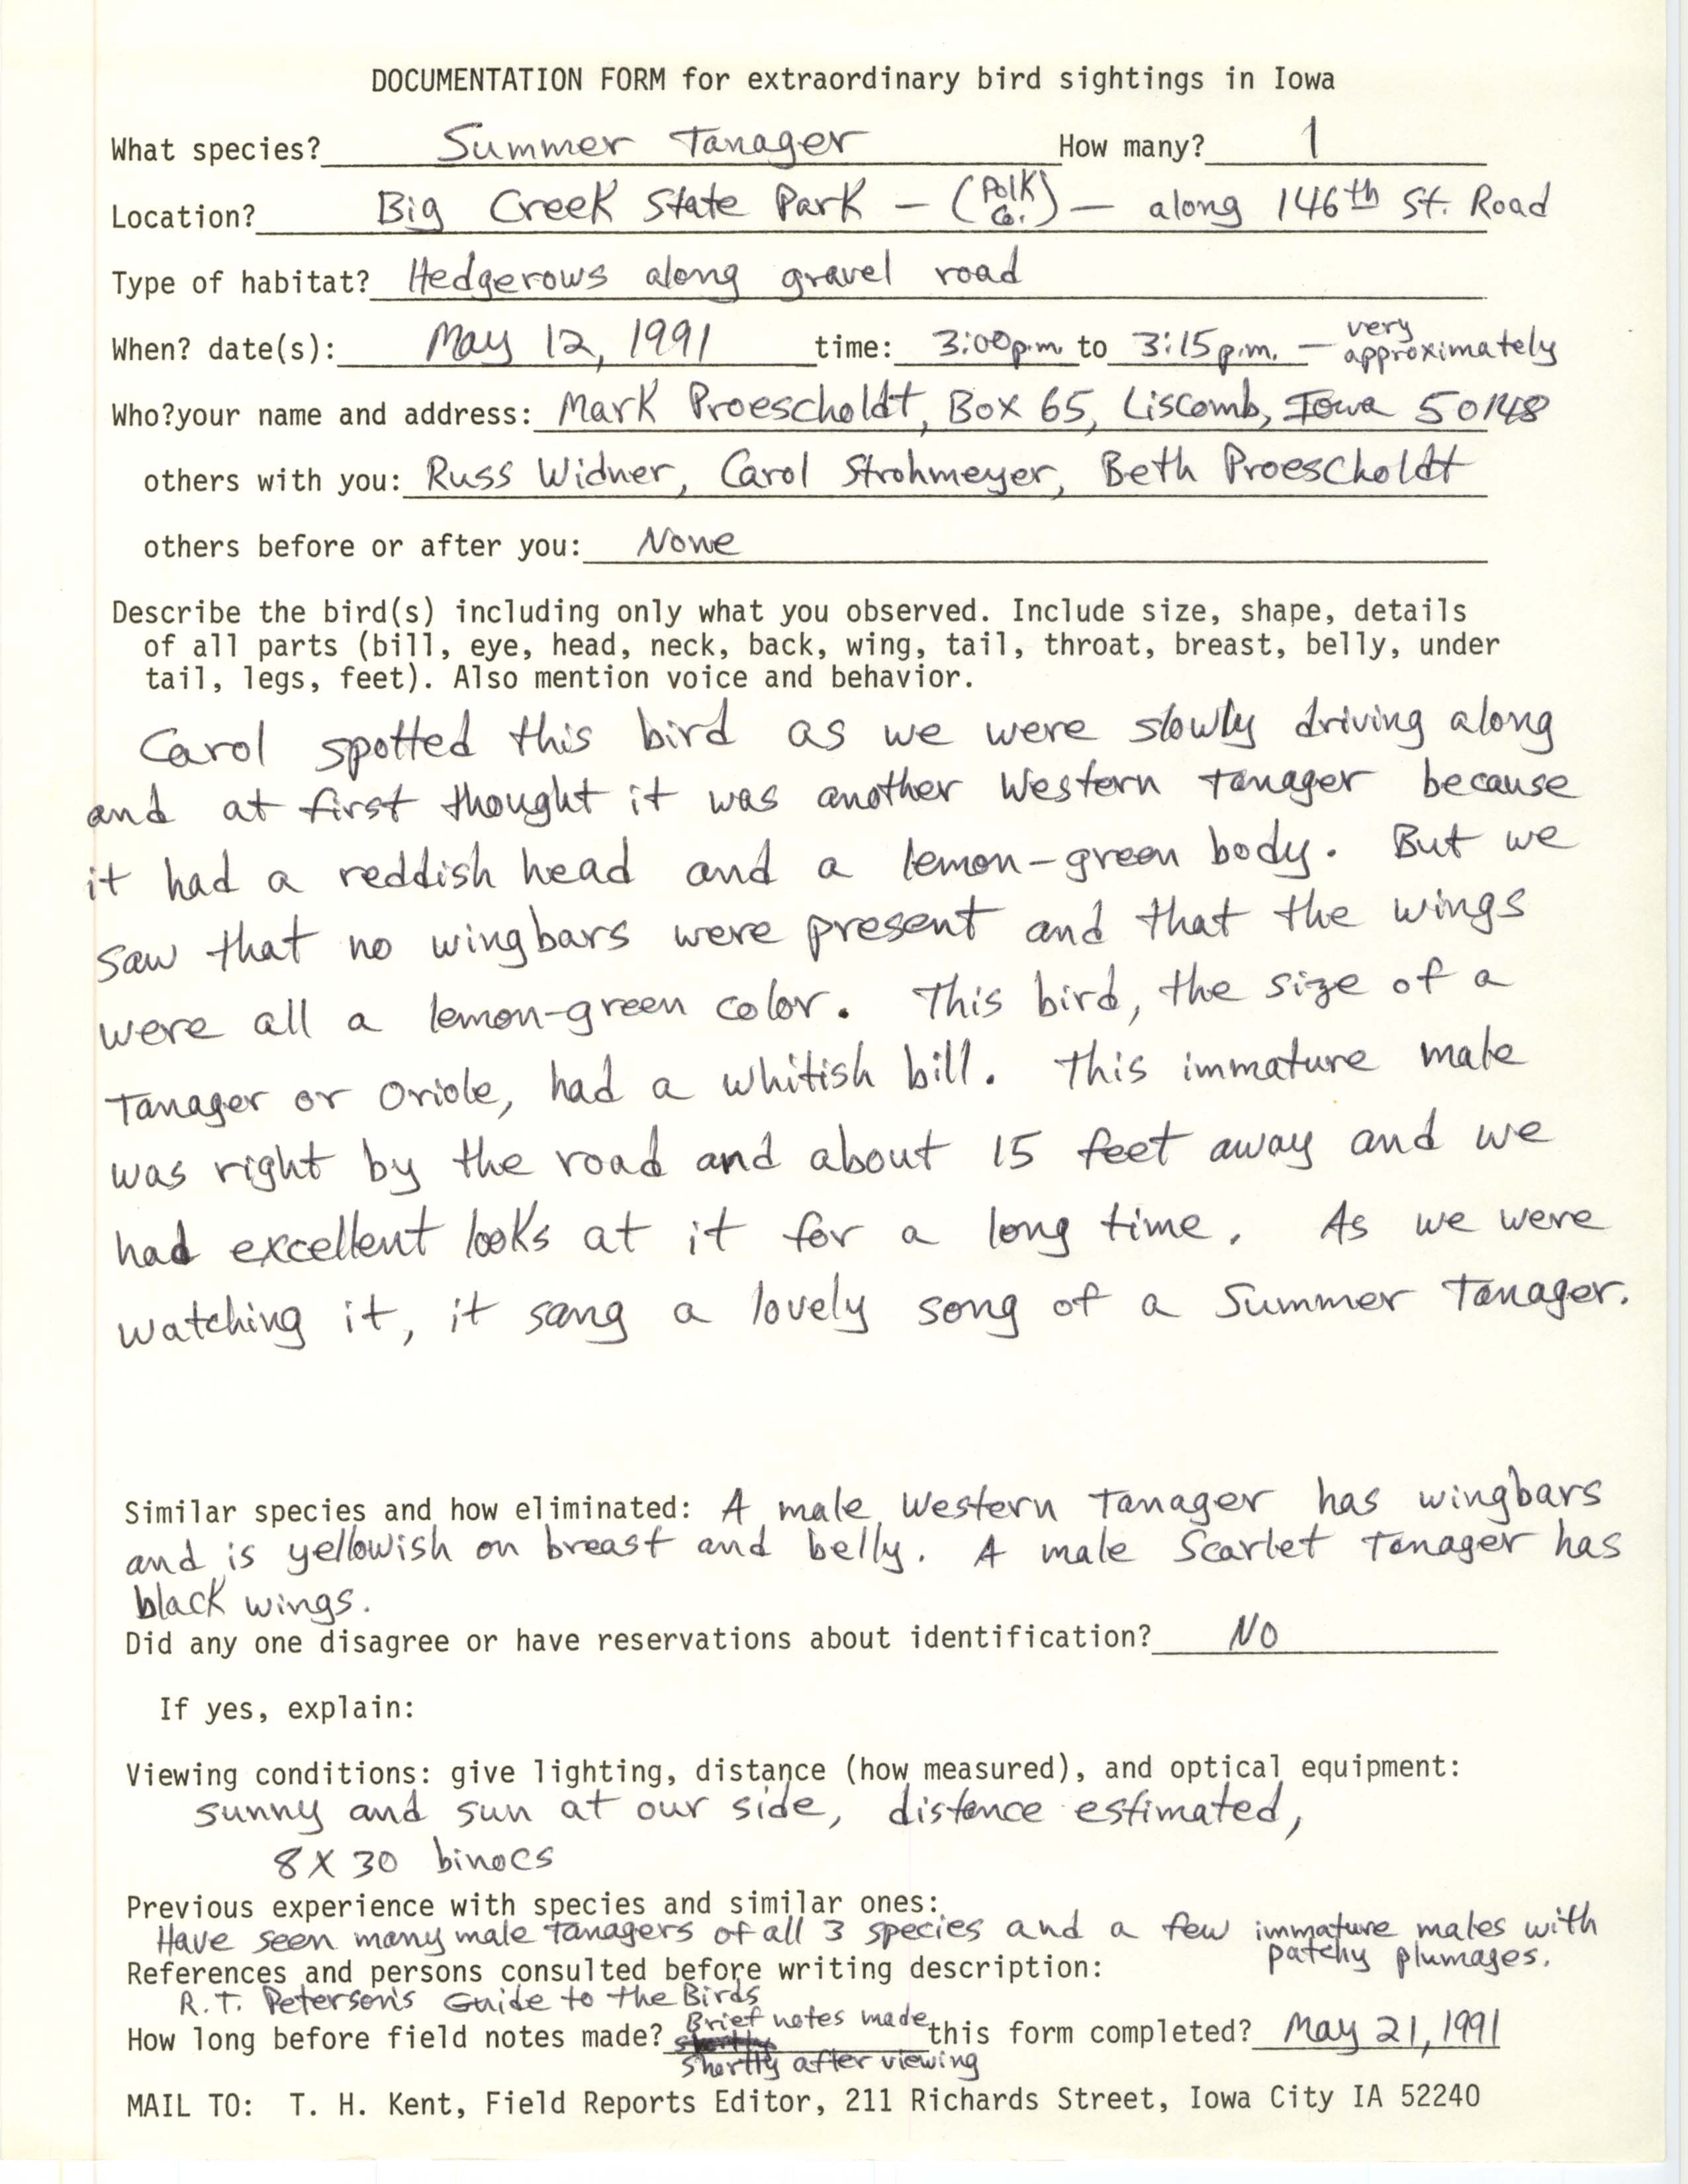 Rare bird documentation form for Summer Tanager at Big Creek State Park, 1991